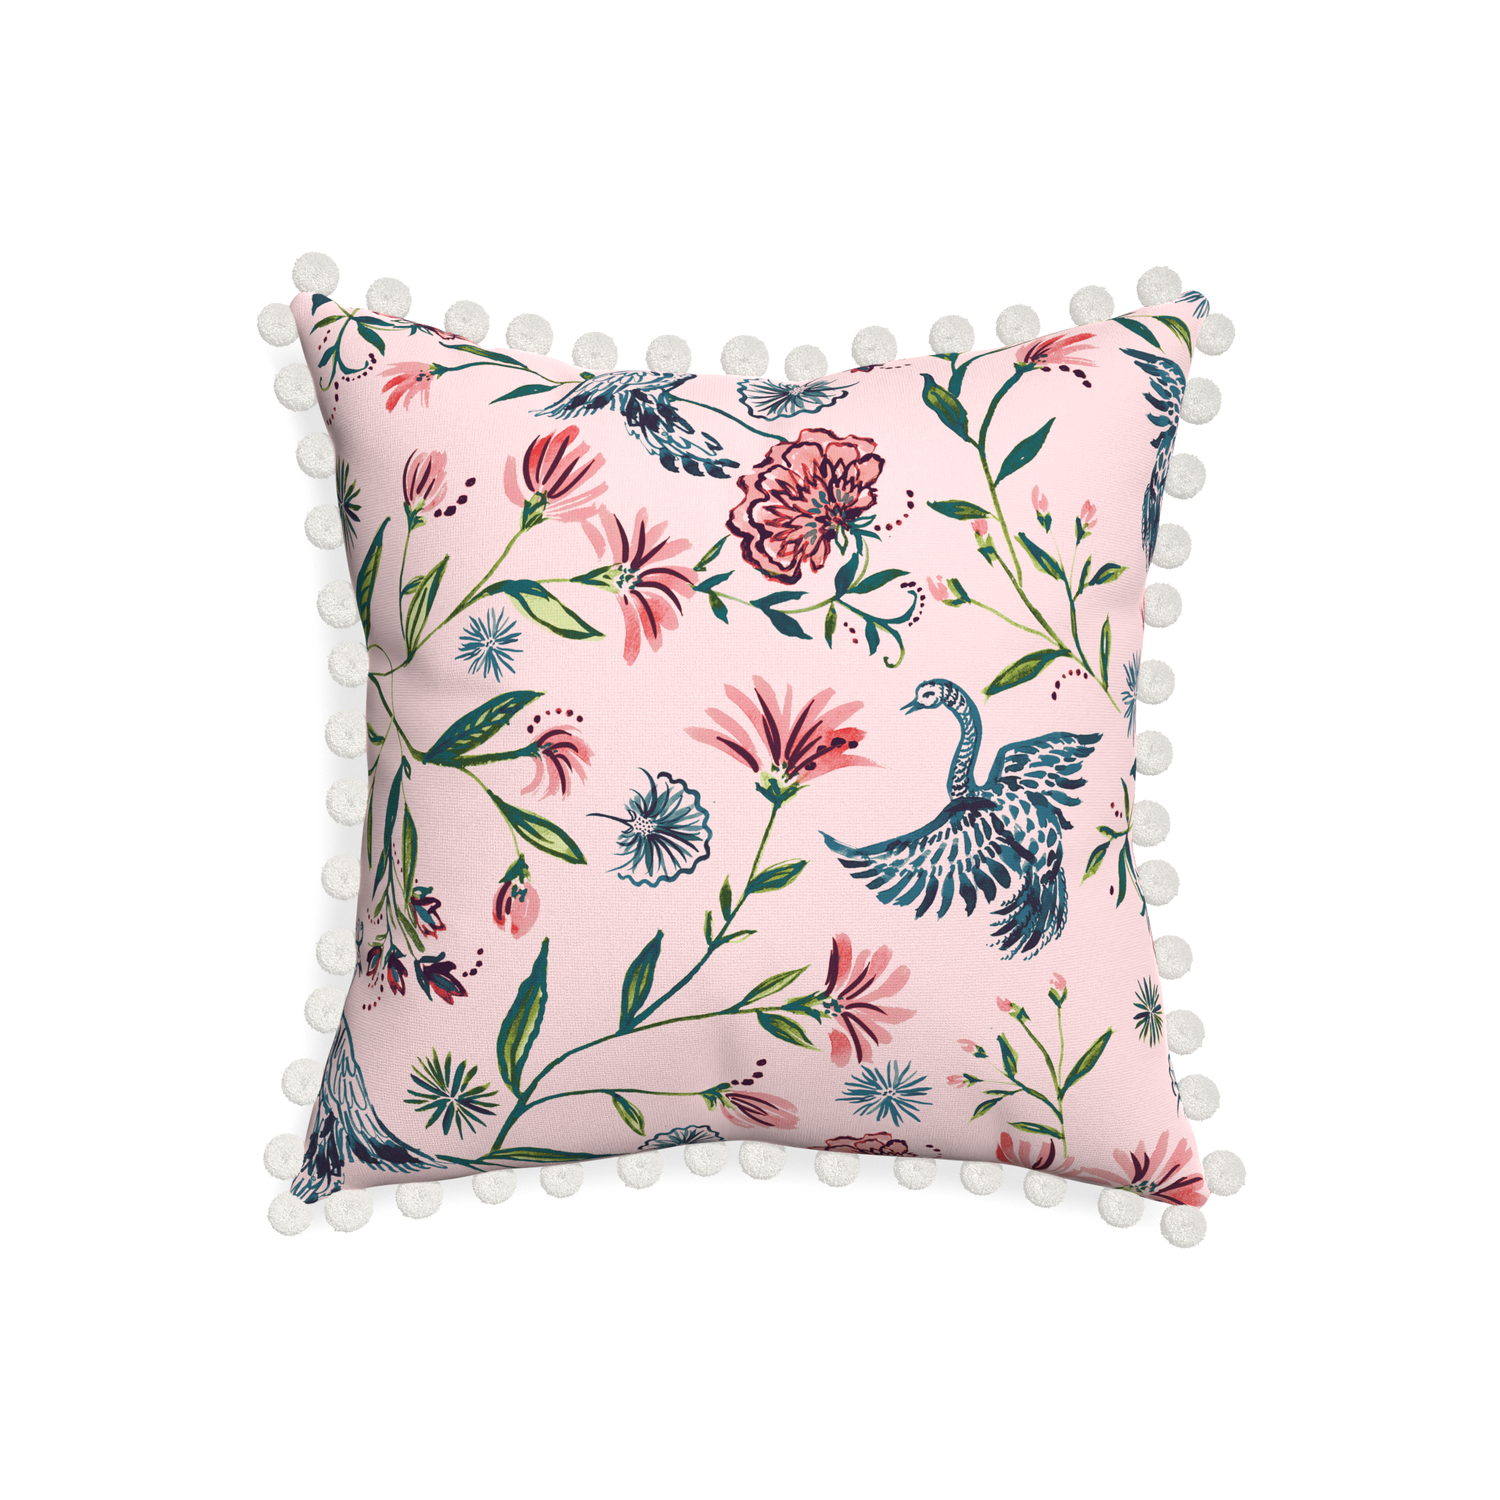 20-square daphne rose custom pillow with snow pom pom on white background